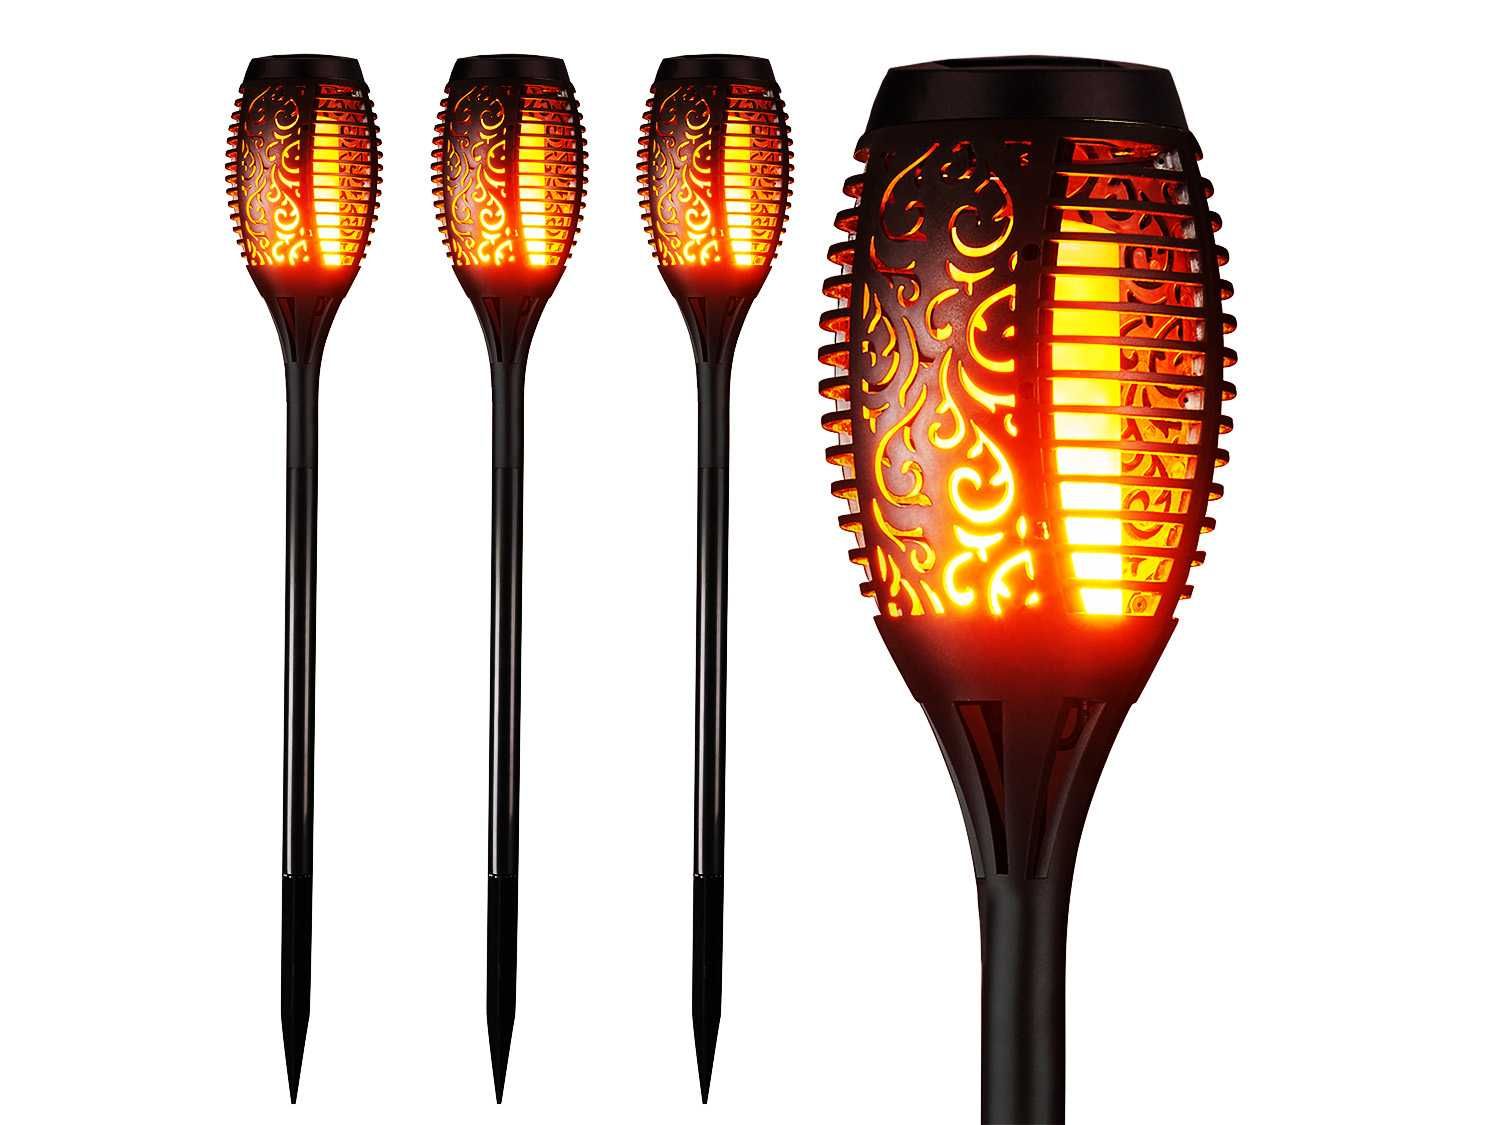 ZESTAW LAMPA SOLARNA LED/ efekt płomień, ogień 4 sztuki/ Ebook GRATIS